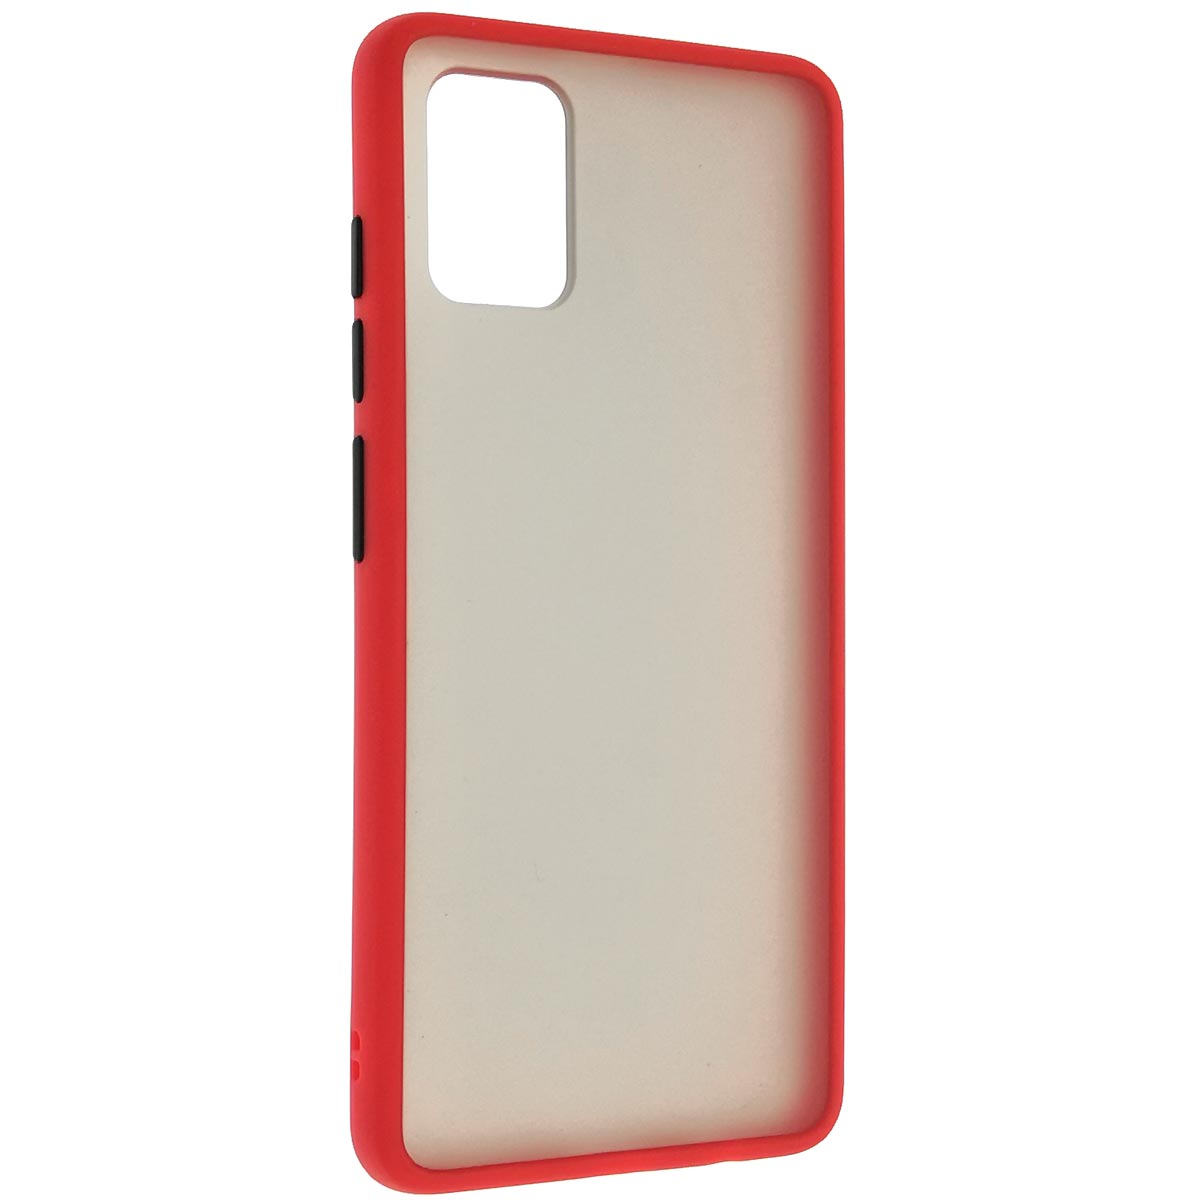 Чехол накладка SKIN SHELL для SAMSUNG Galaxy A51 (SM-A515), силикон, пластик, цвет окантовки красный